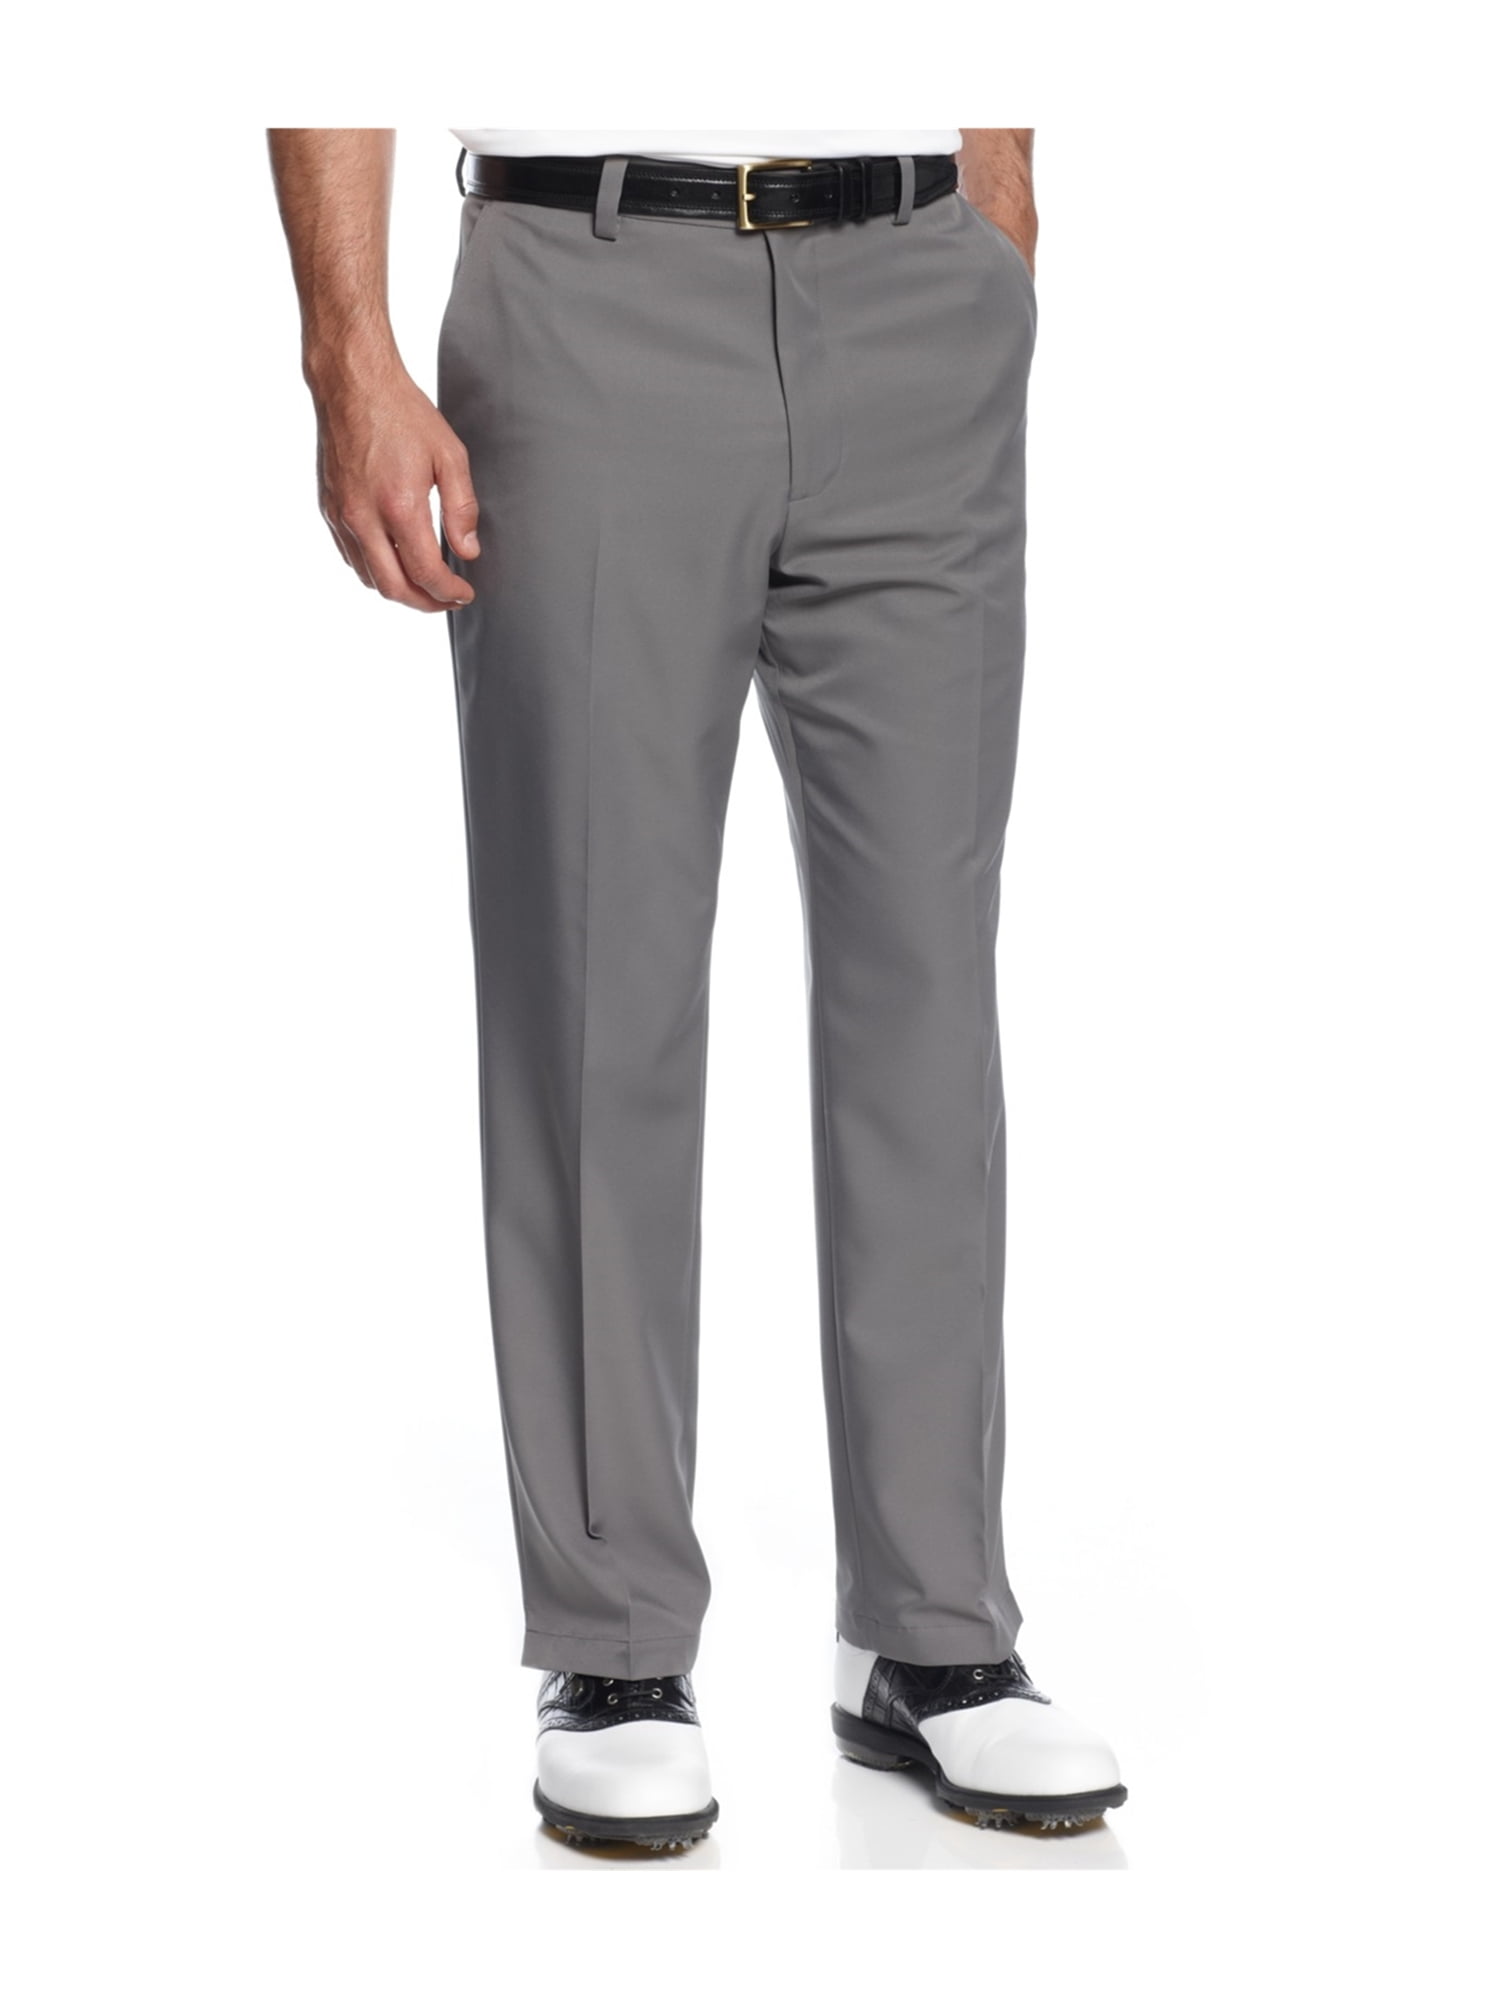 Greg Norman Mens Golf Casual Jogger Pants greyasphalt 36x32 | Walmart ...